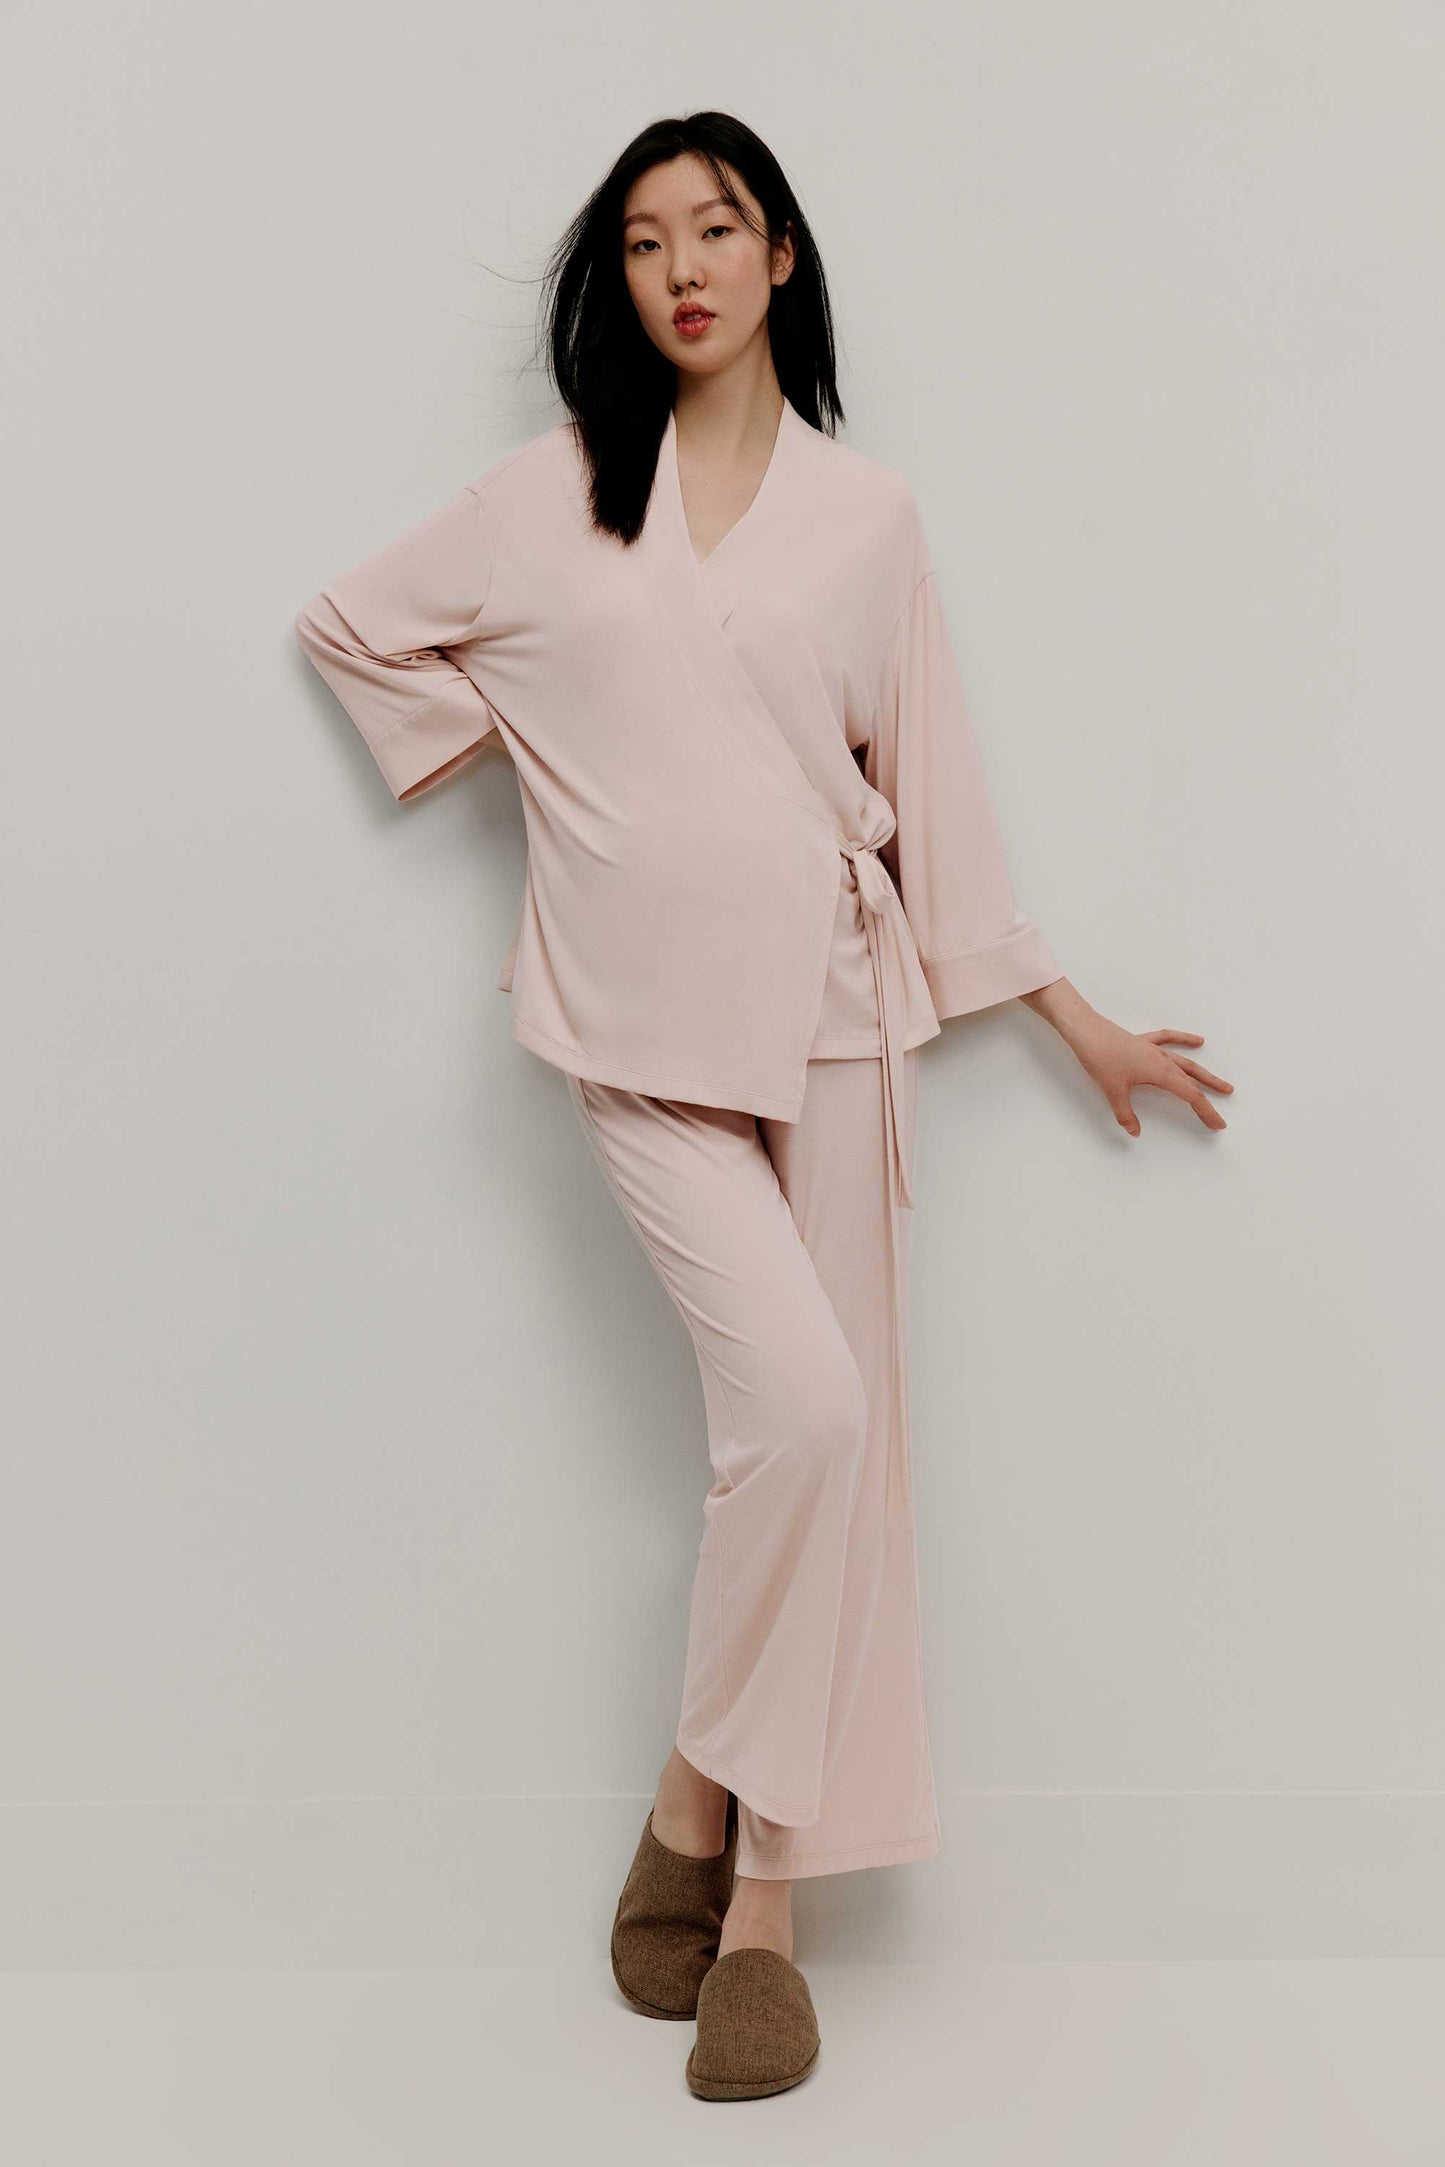 A pregnant woman wearing pink maternity pajama set